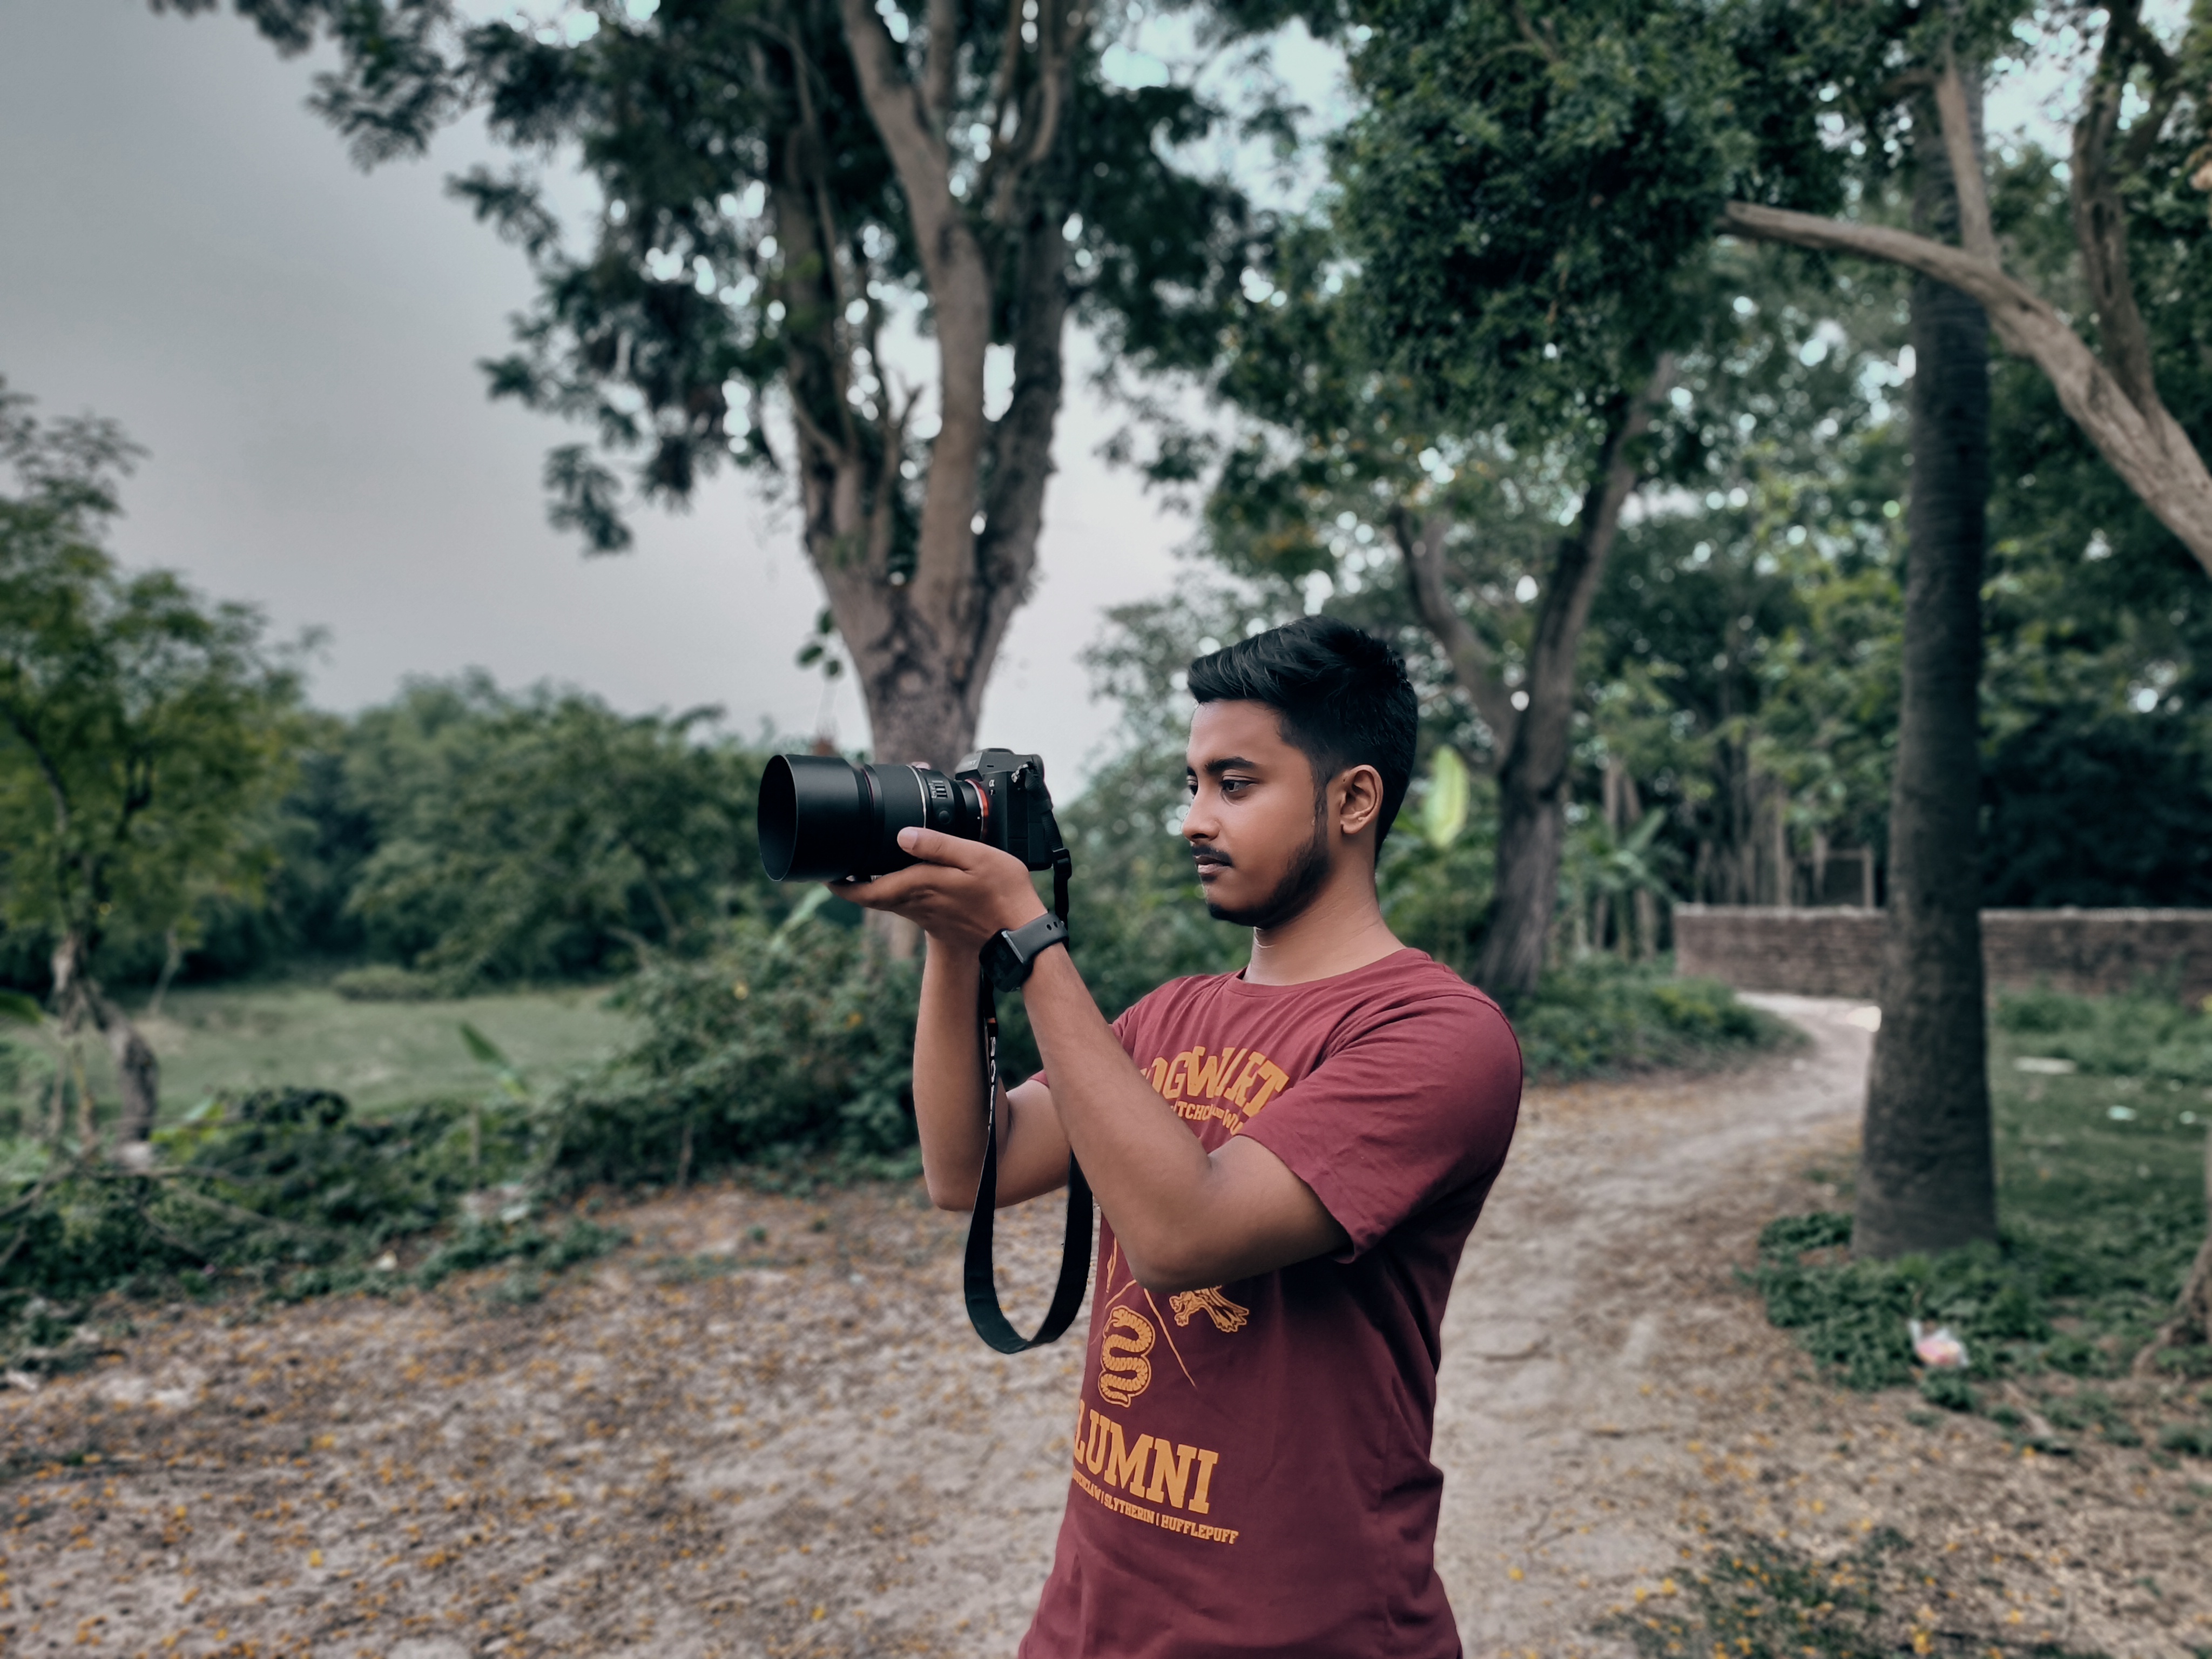 Arun Photography - Freelance Photographer - Real pic studio | LinkedIn